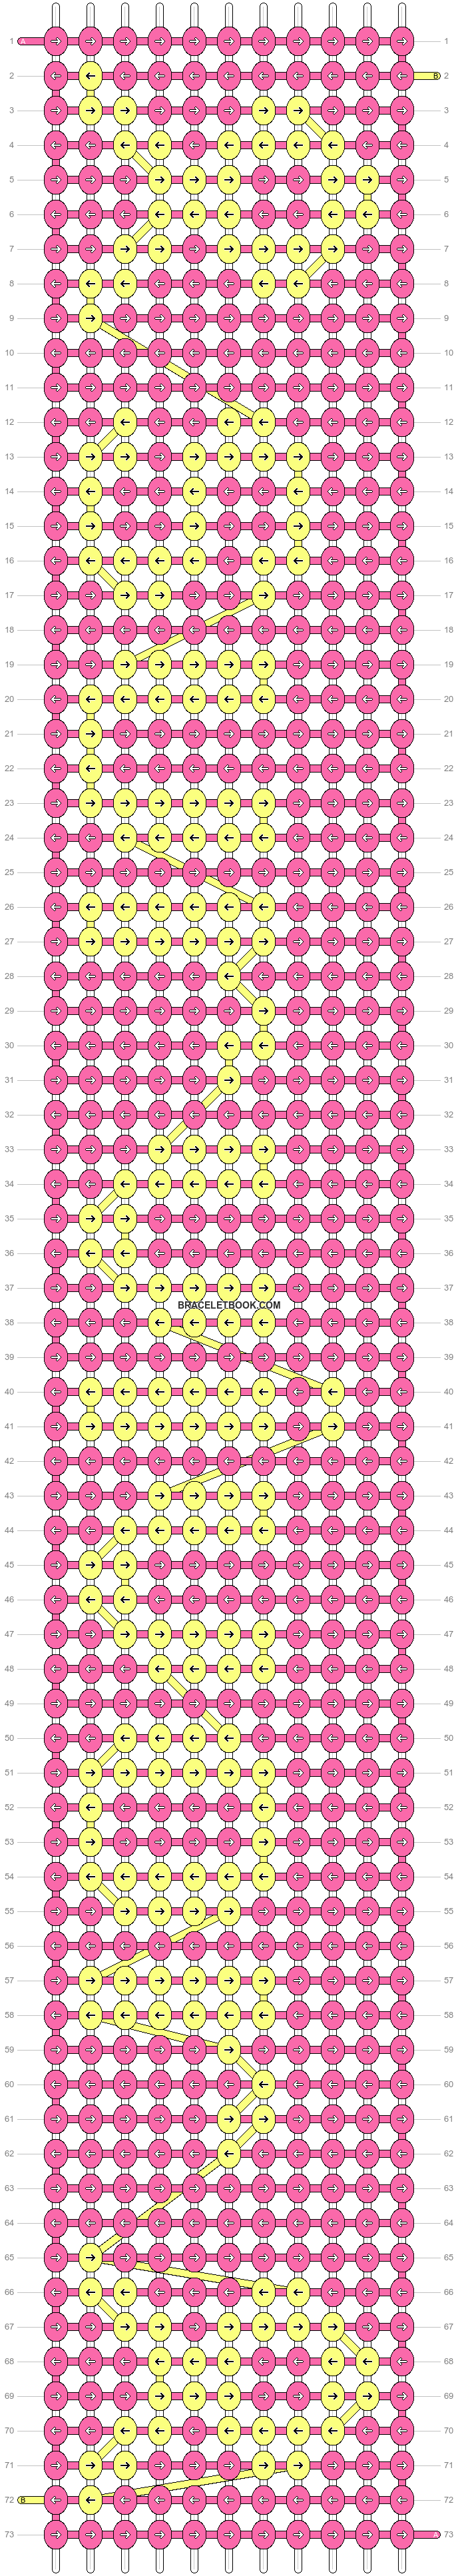 Alpha pattern #11594 variation #21378 pattern